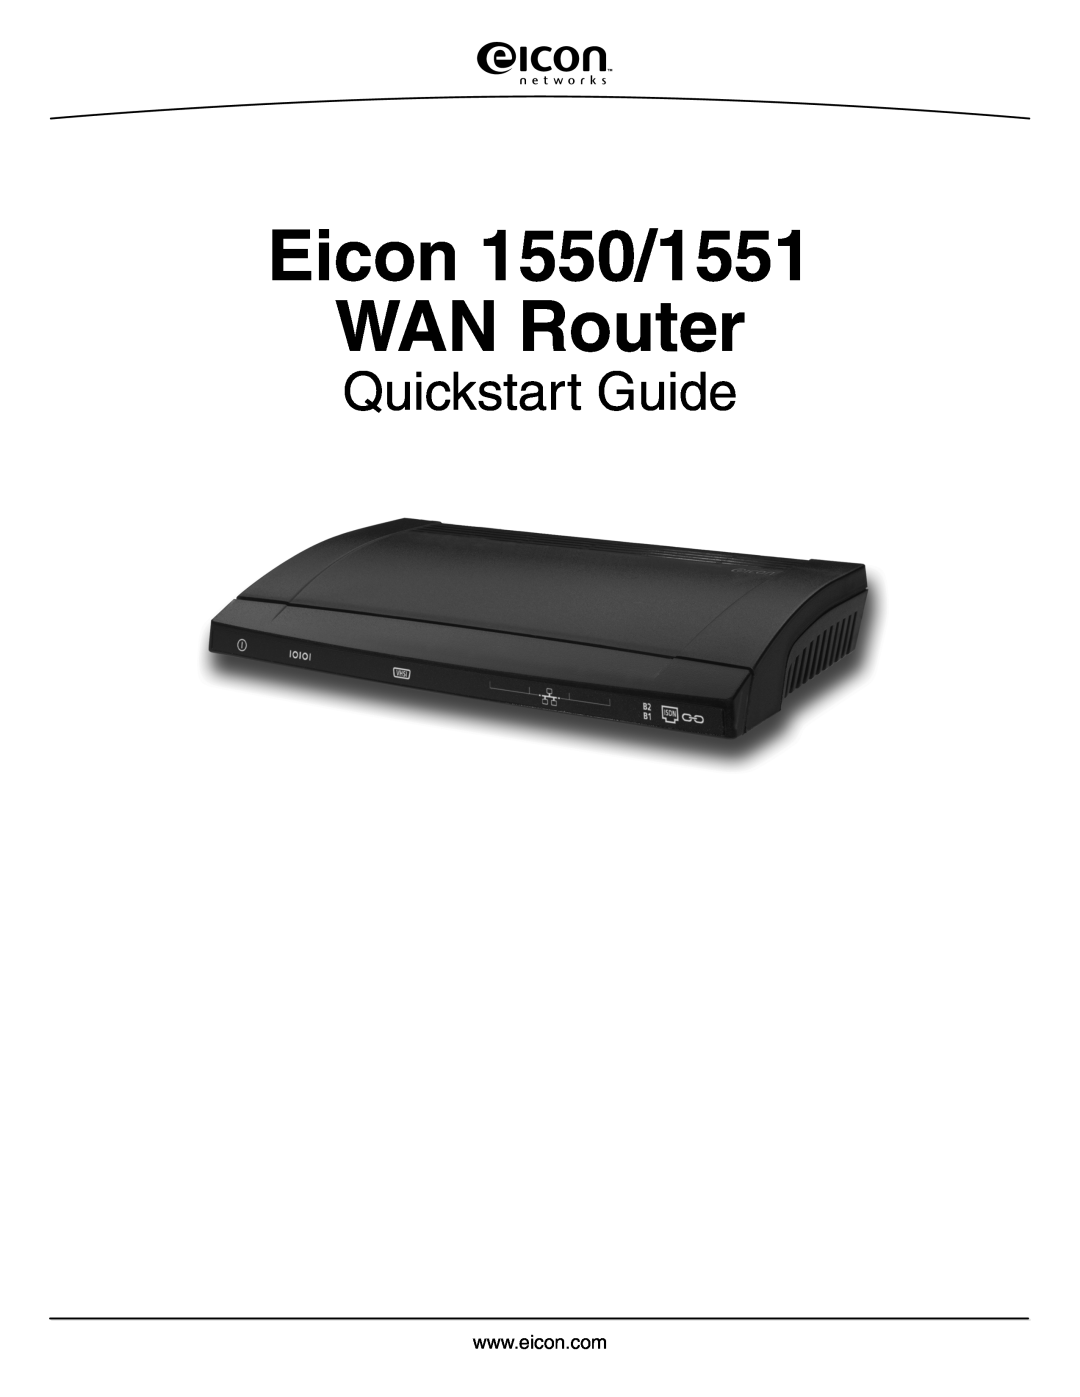 Eicon Networks quick start Eicon 1550/1551 WAN Router, Quickstart Guide 